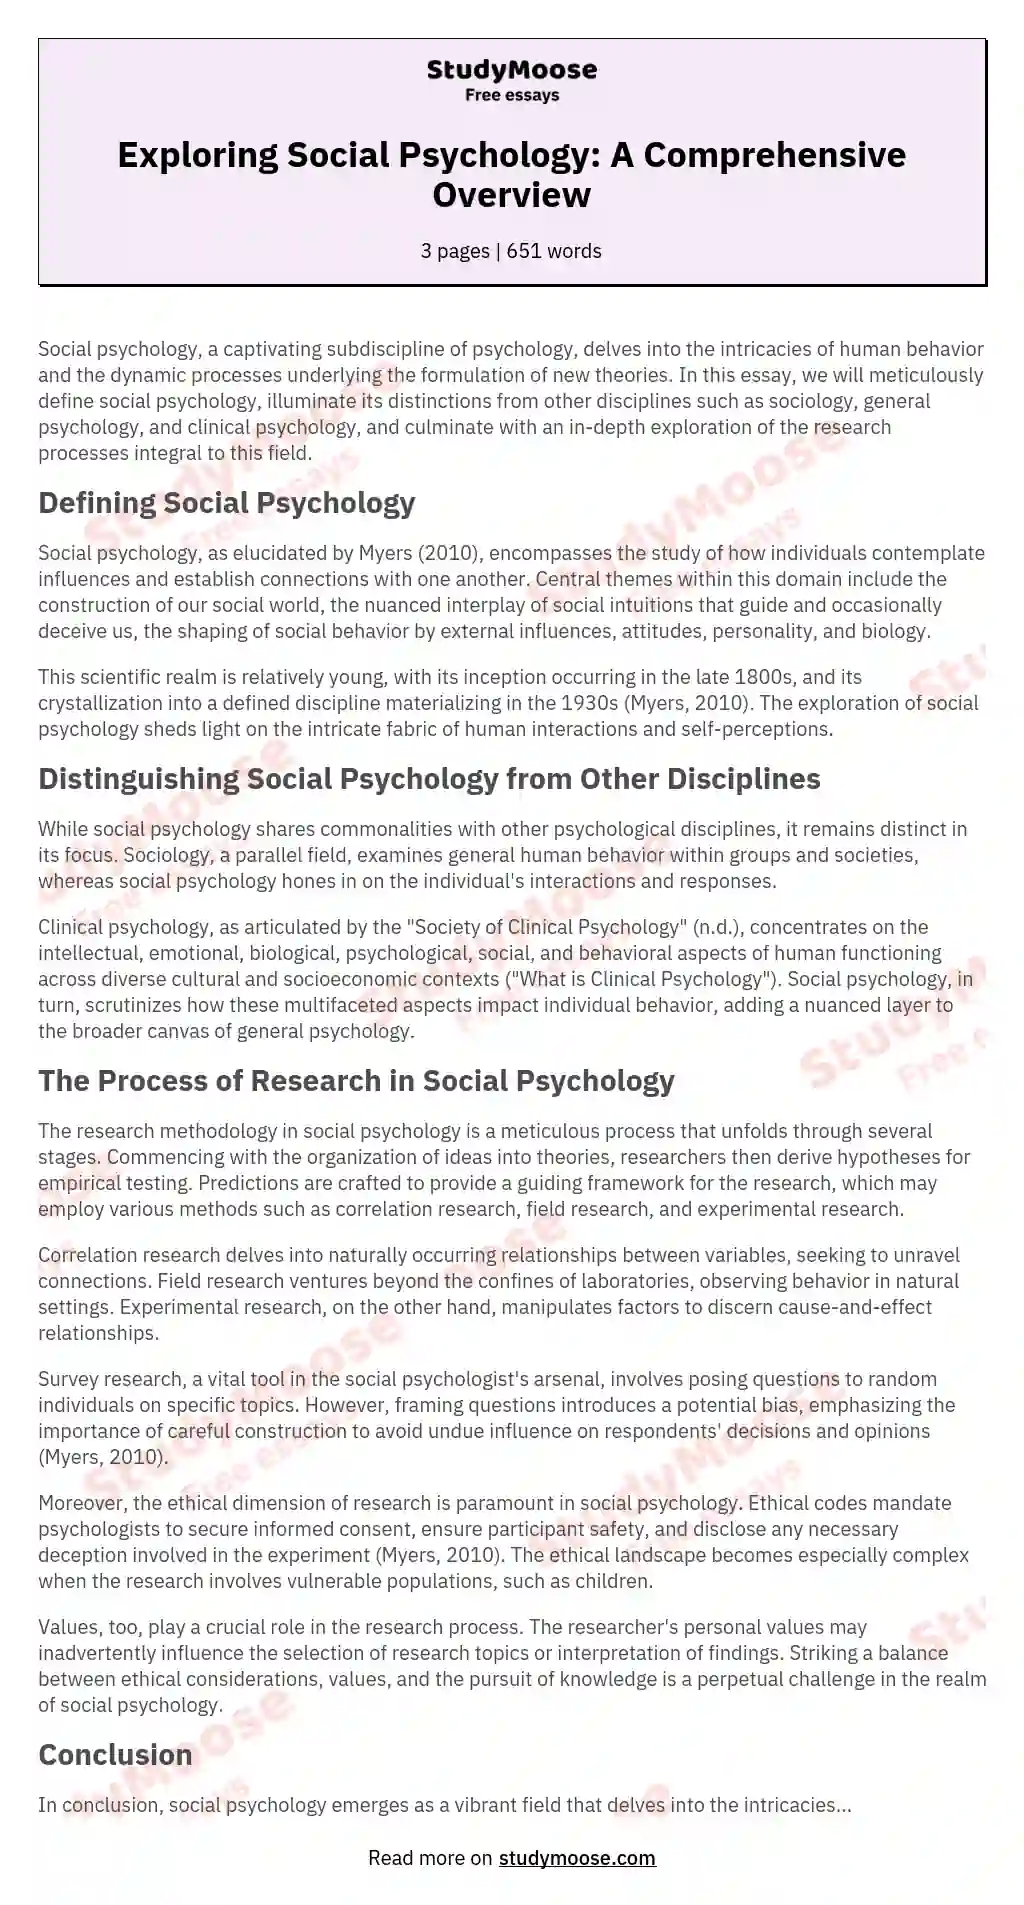 Exploring Social Psychology: A Comprehensive Overview essay